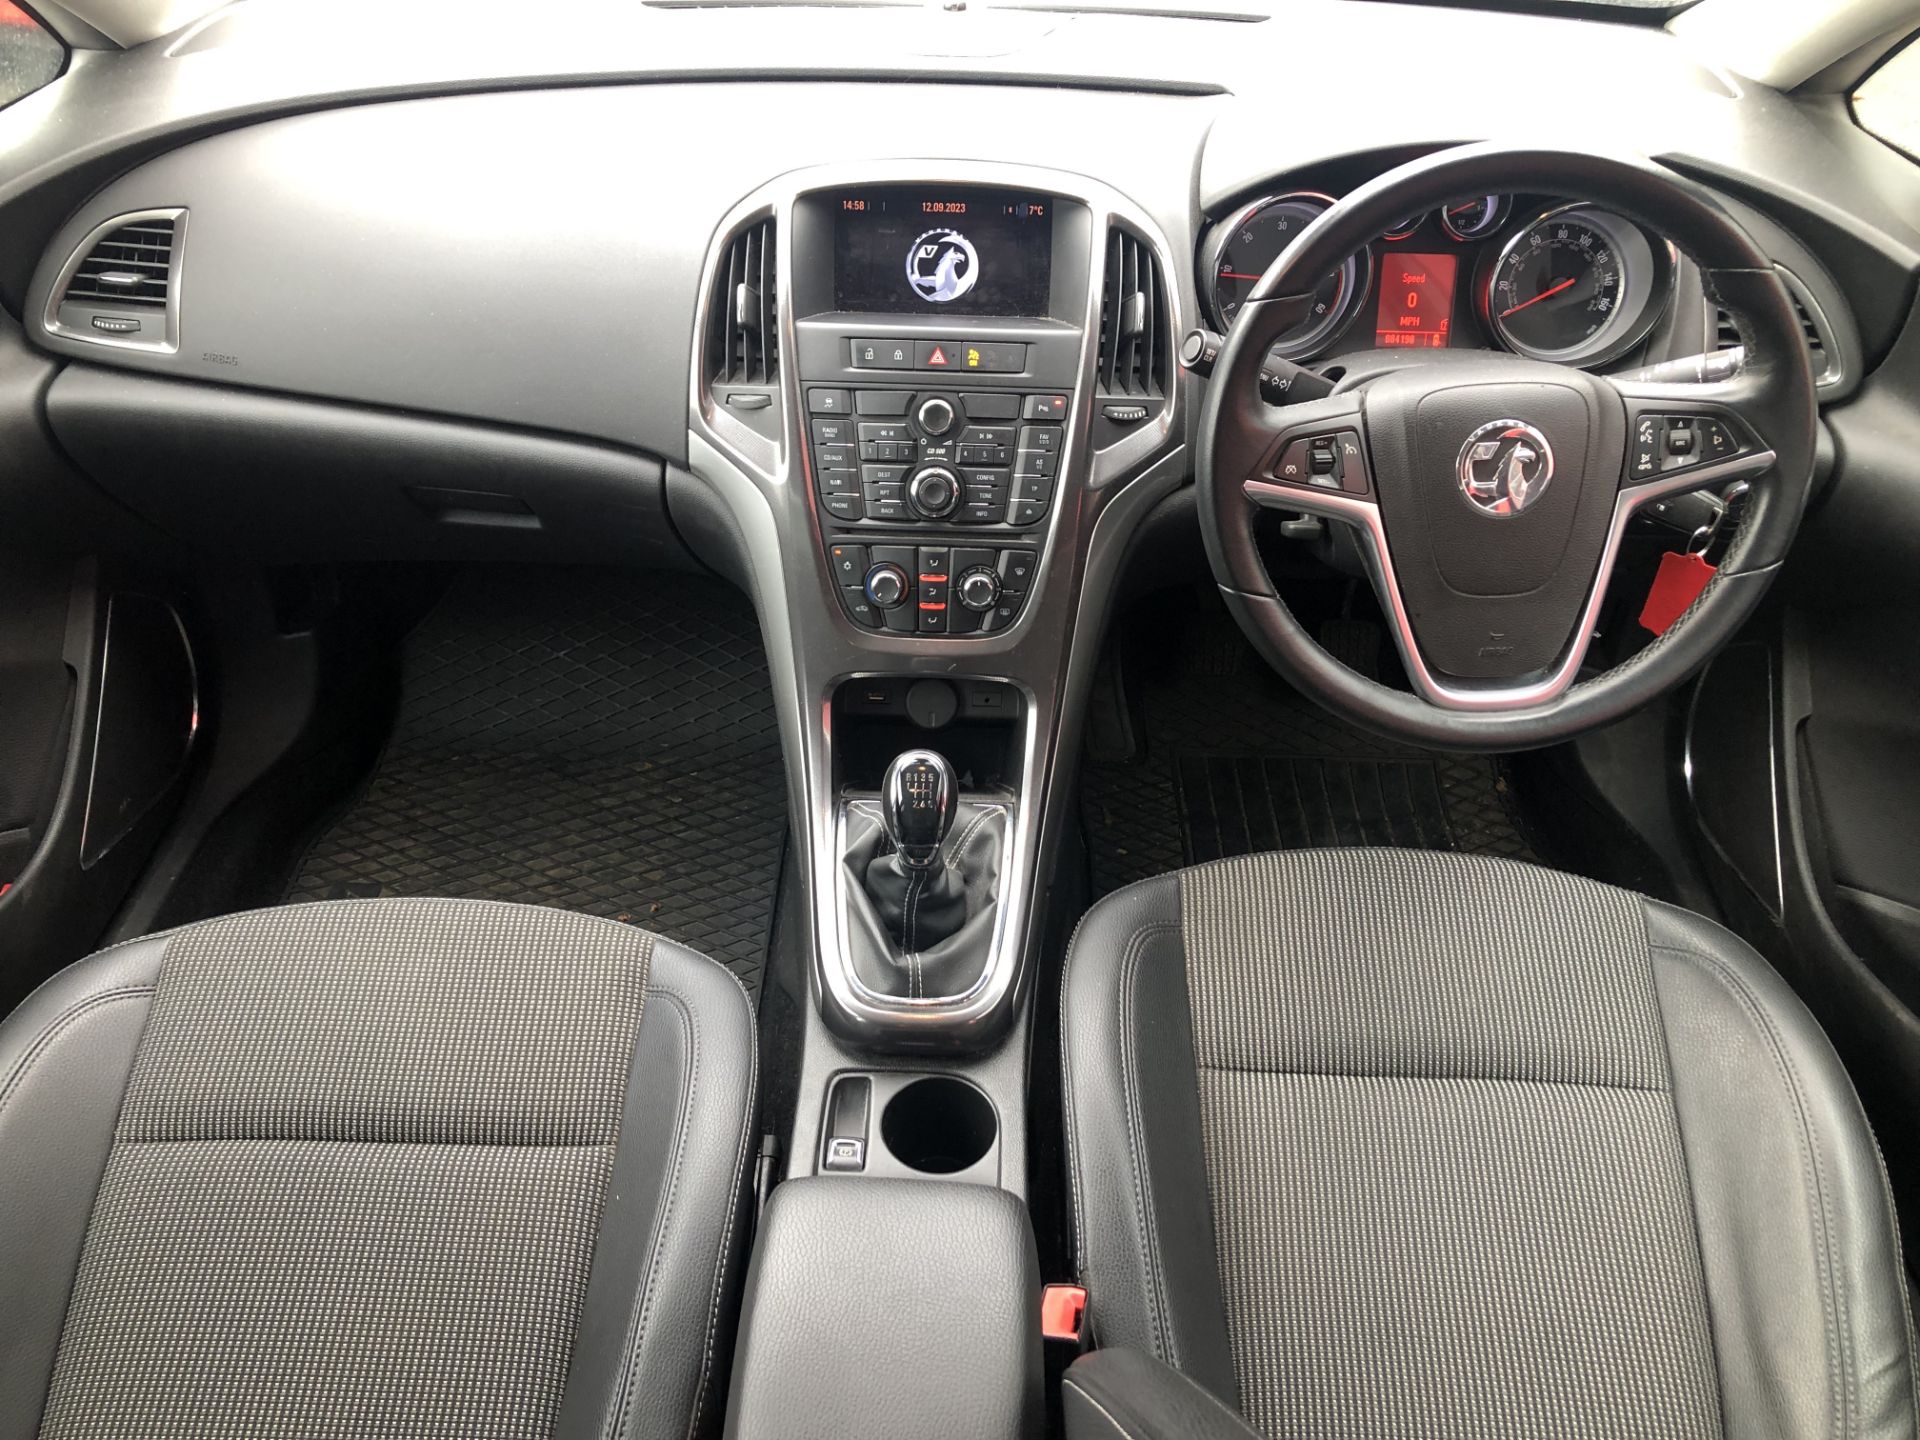 Vauxhall Astra 1.7 CDTi 16v (110ps) SE Sports Tourer, Registration: VK60TRZ, Date First - Bild 7 aus 8